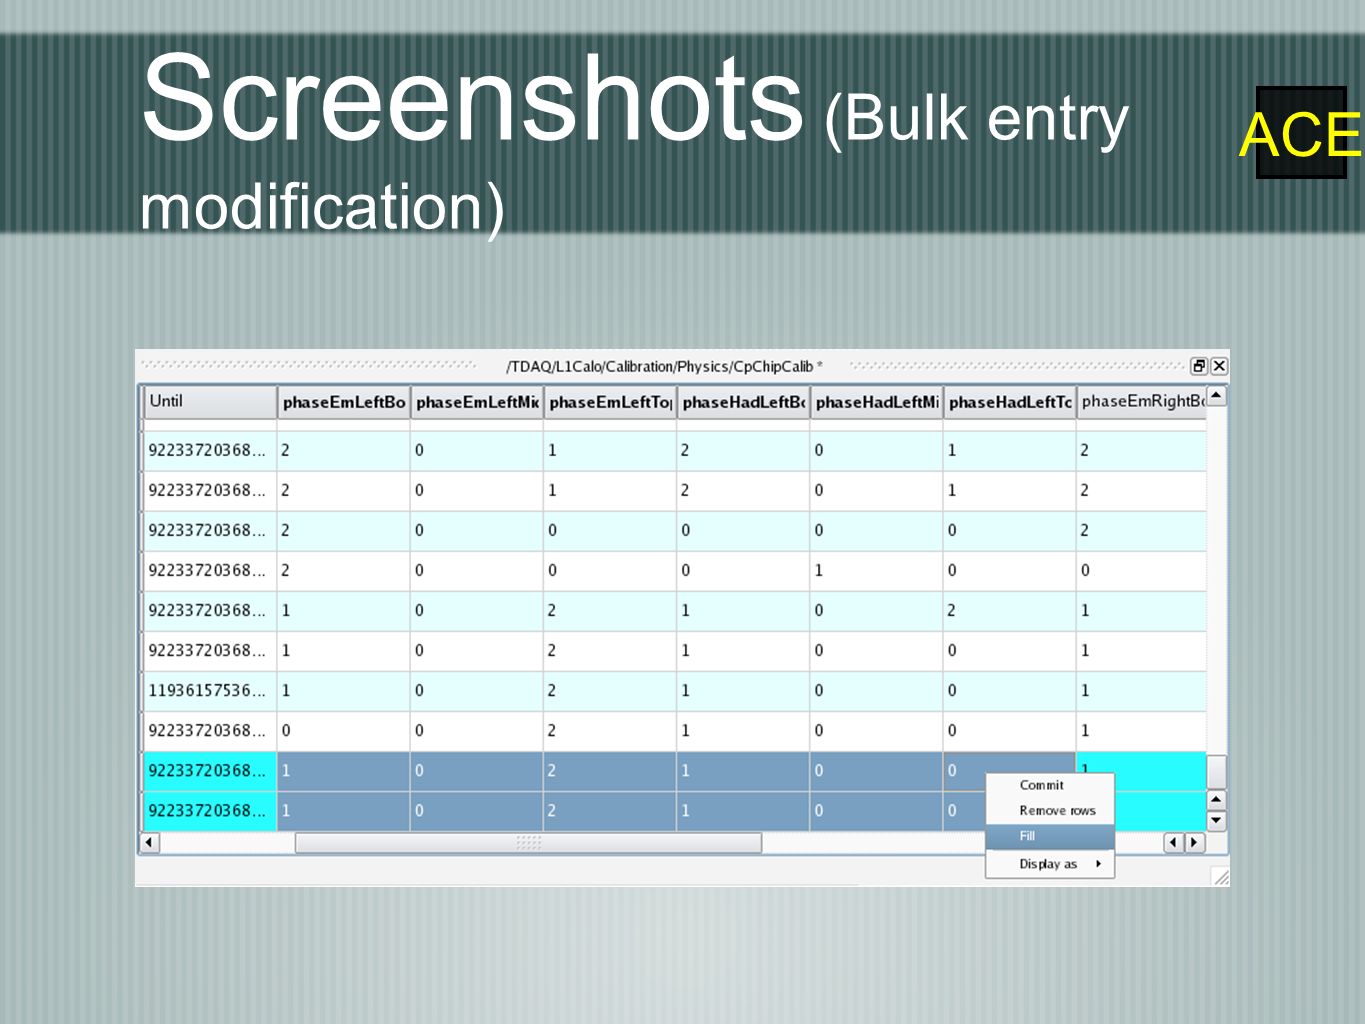 ACE Screenshots (Bulk entry modification)